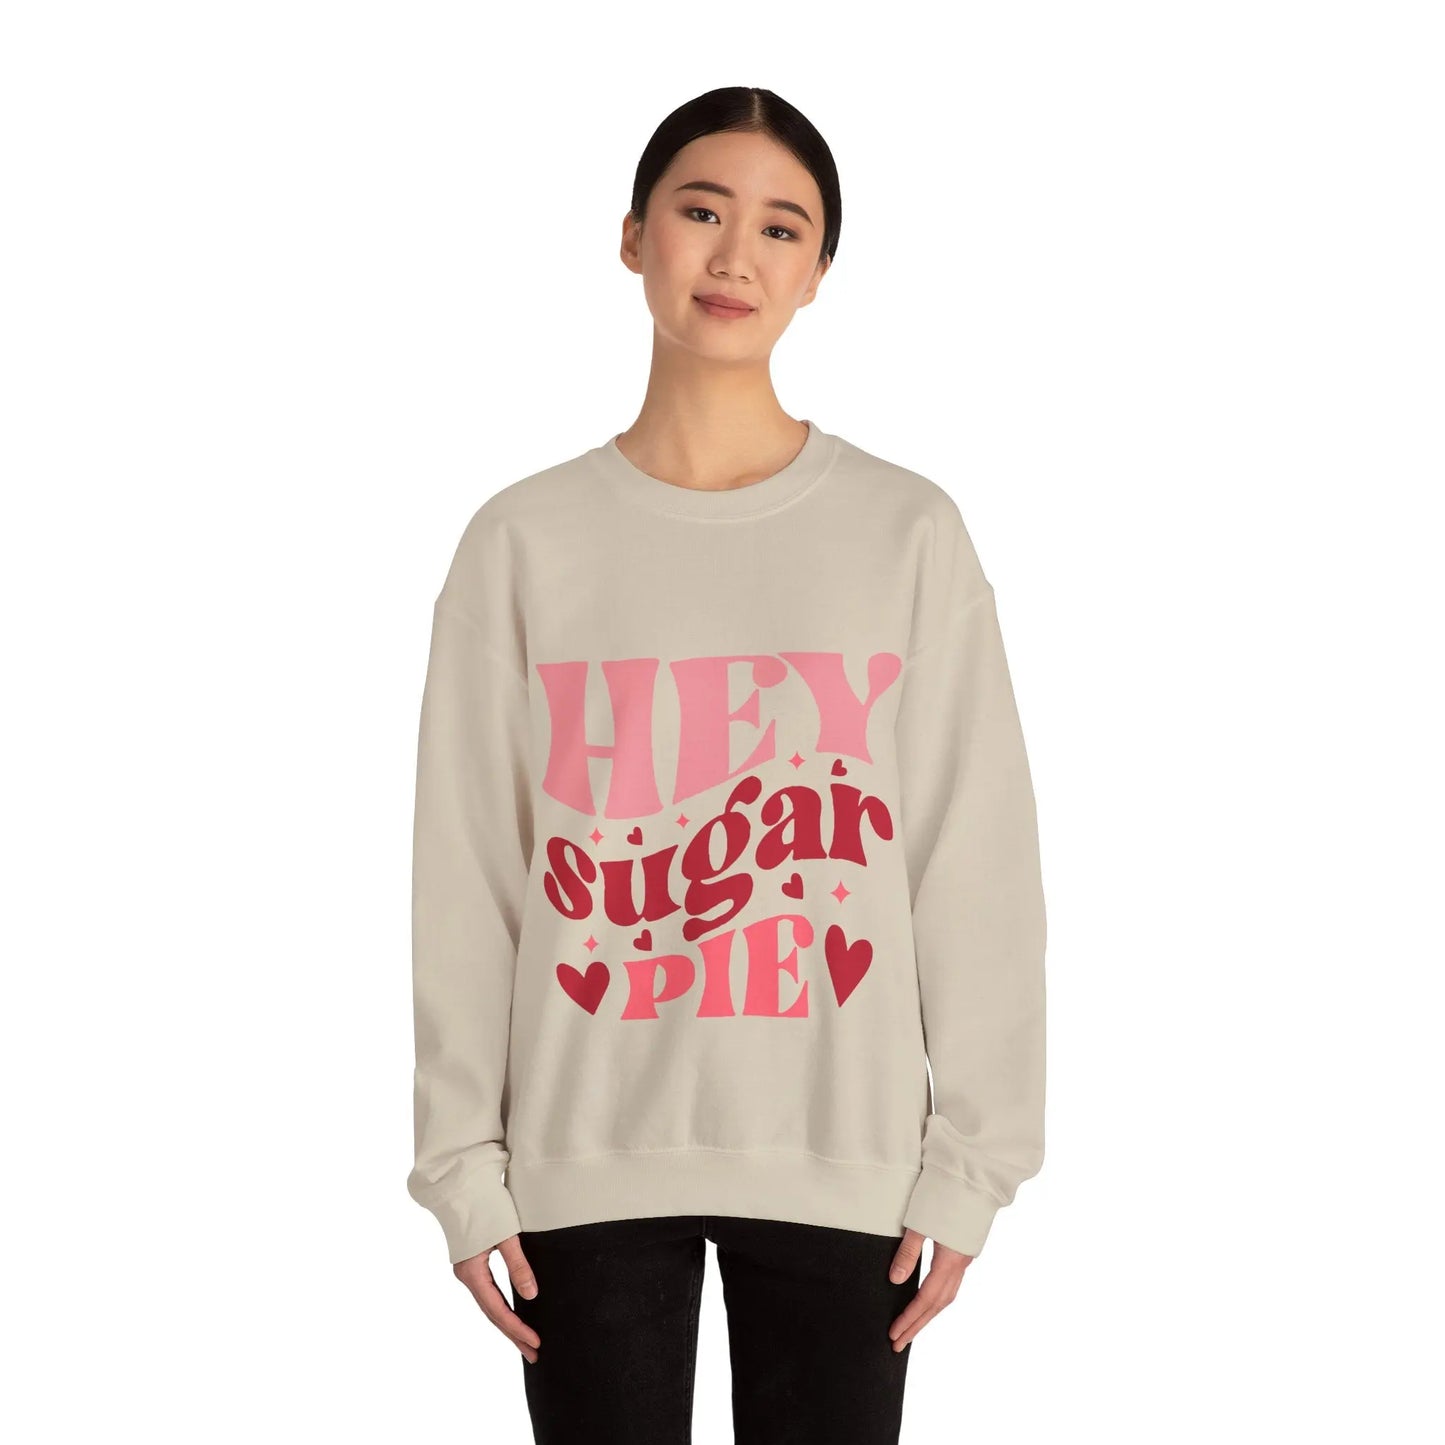 Hey Sugar Pie - Unisex Sweatshirt Printify